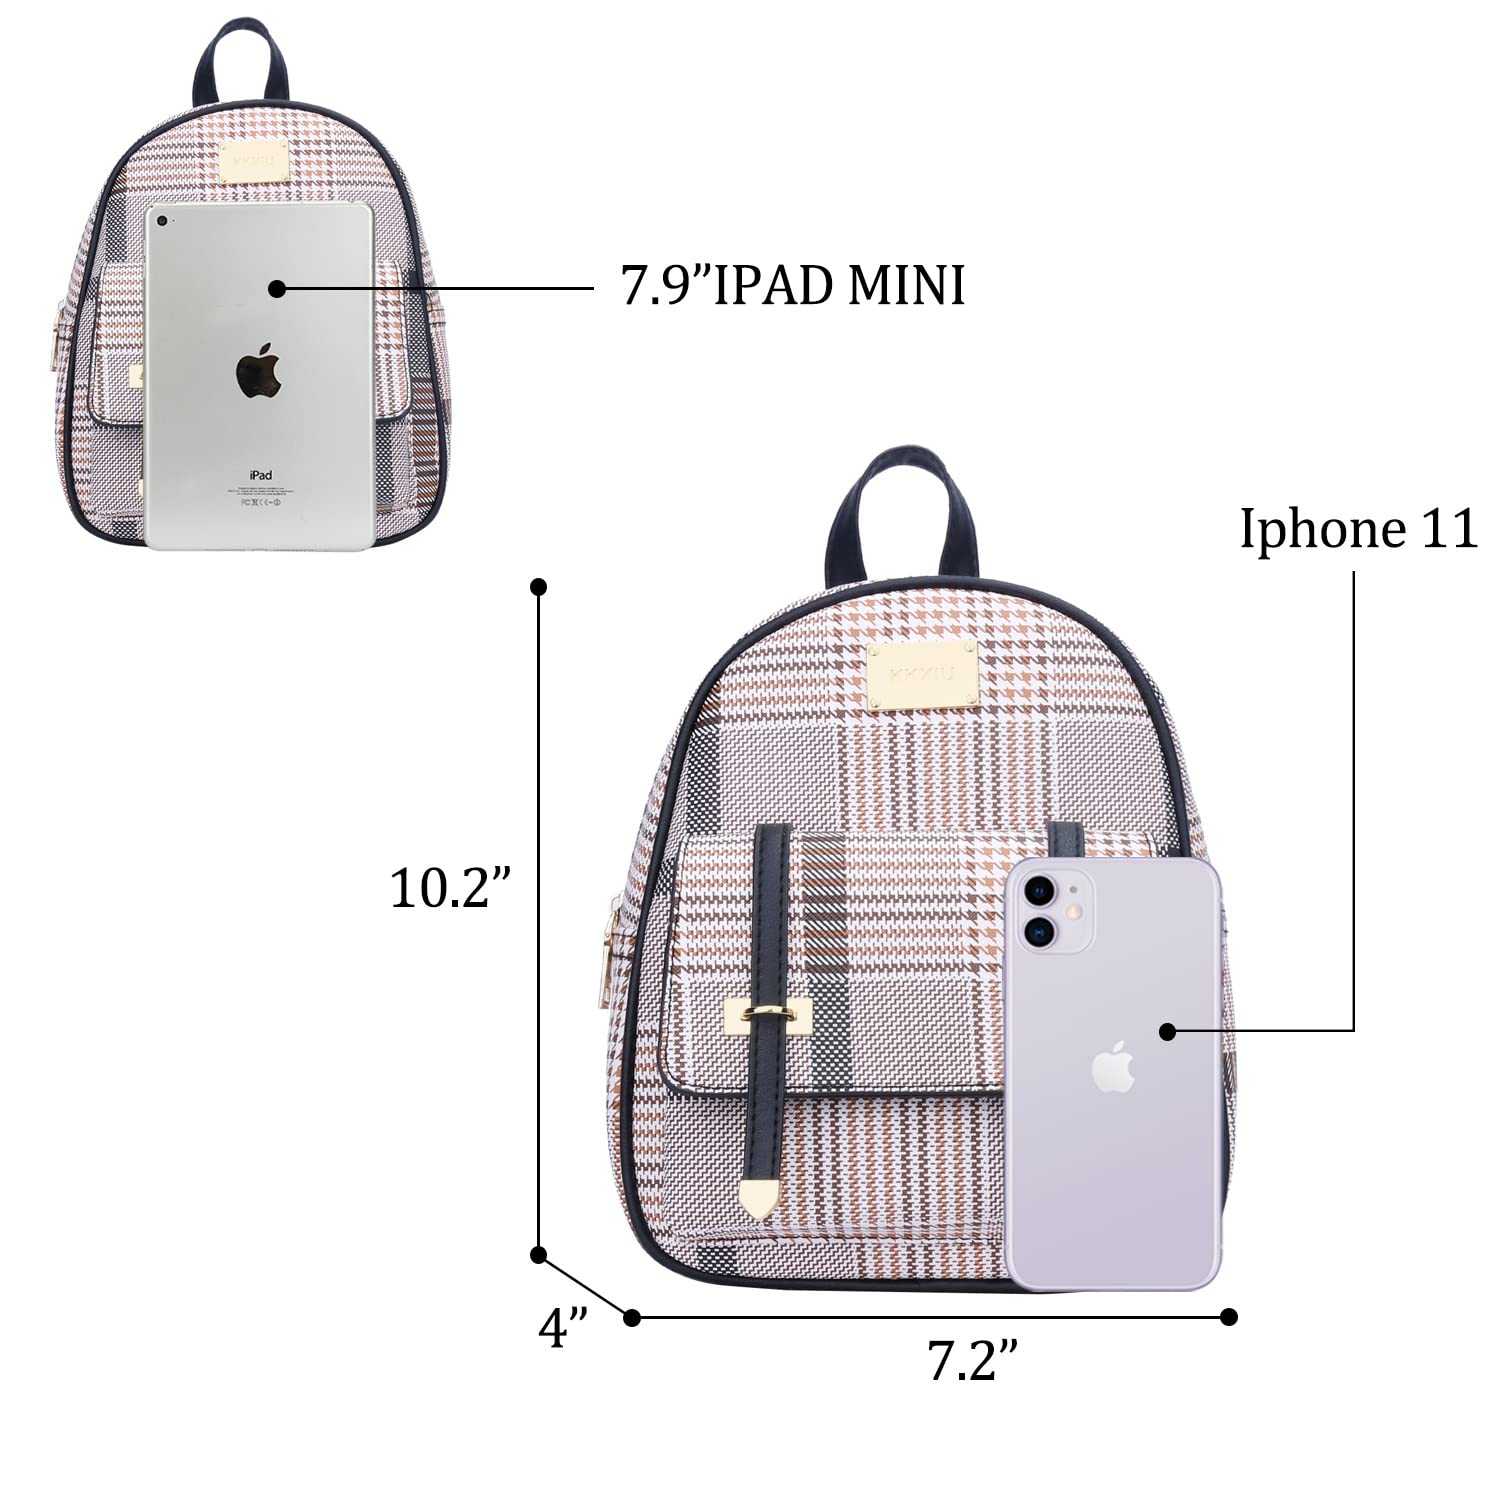 KKXIU Women Small Backpack Purse Convertible Leather Mini Daypacks Crossbody Shoulder Bag For Girls